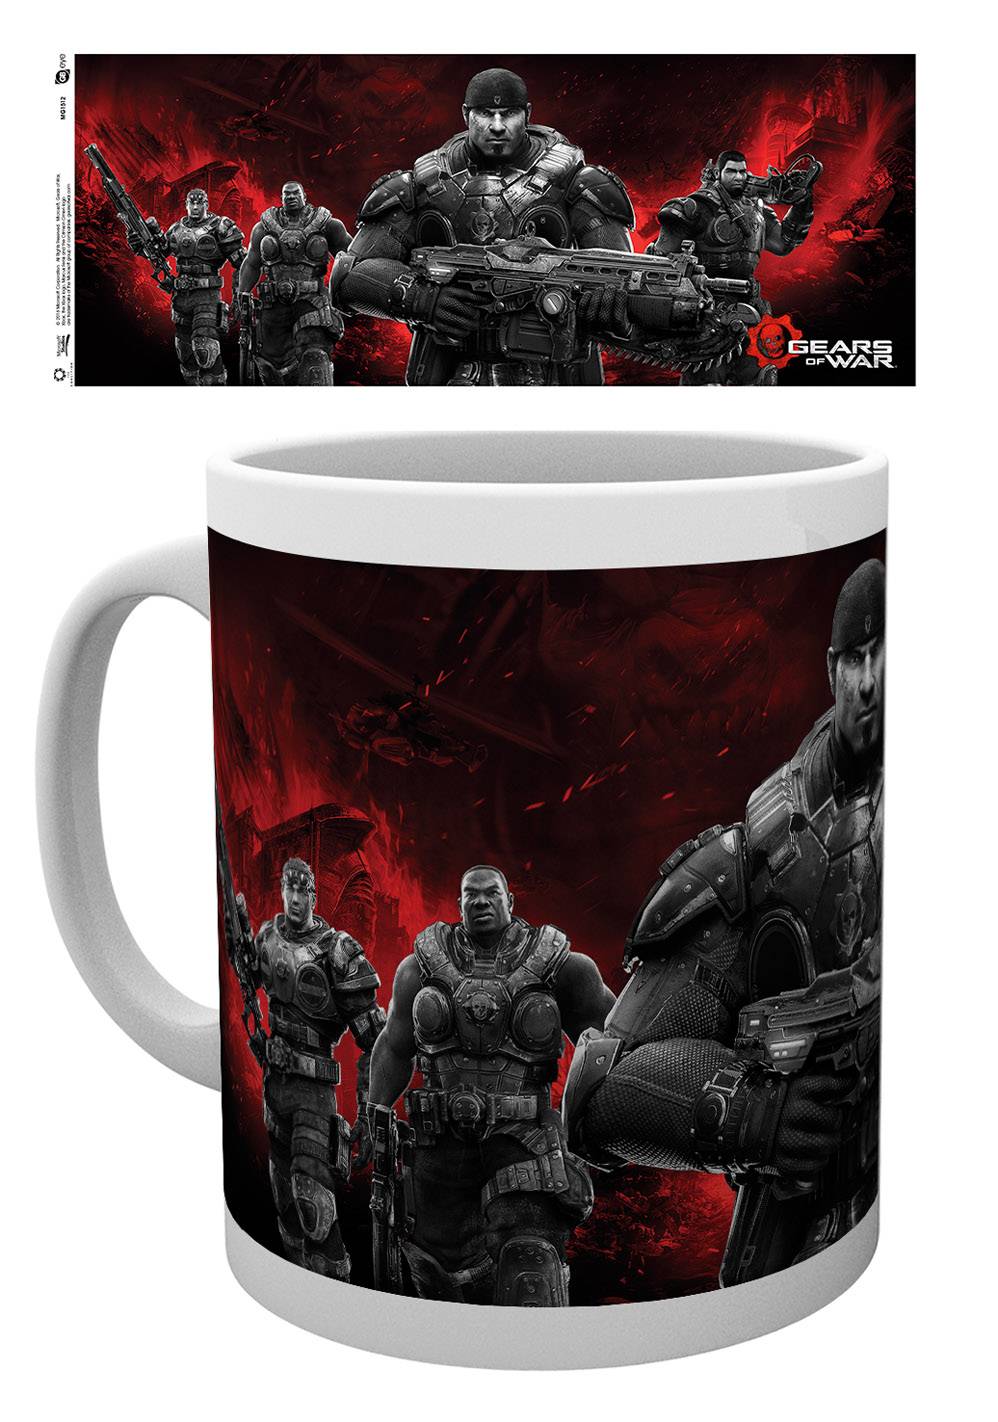 Buy Gears of War Ultimate Coffee Mug